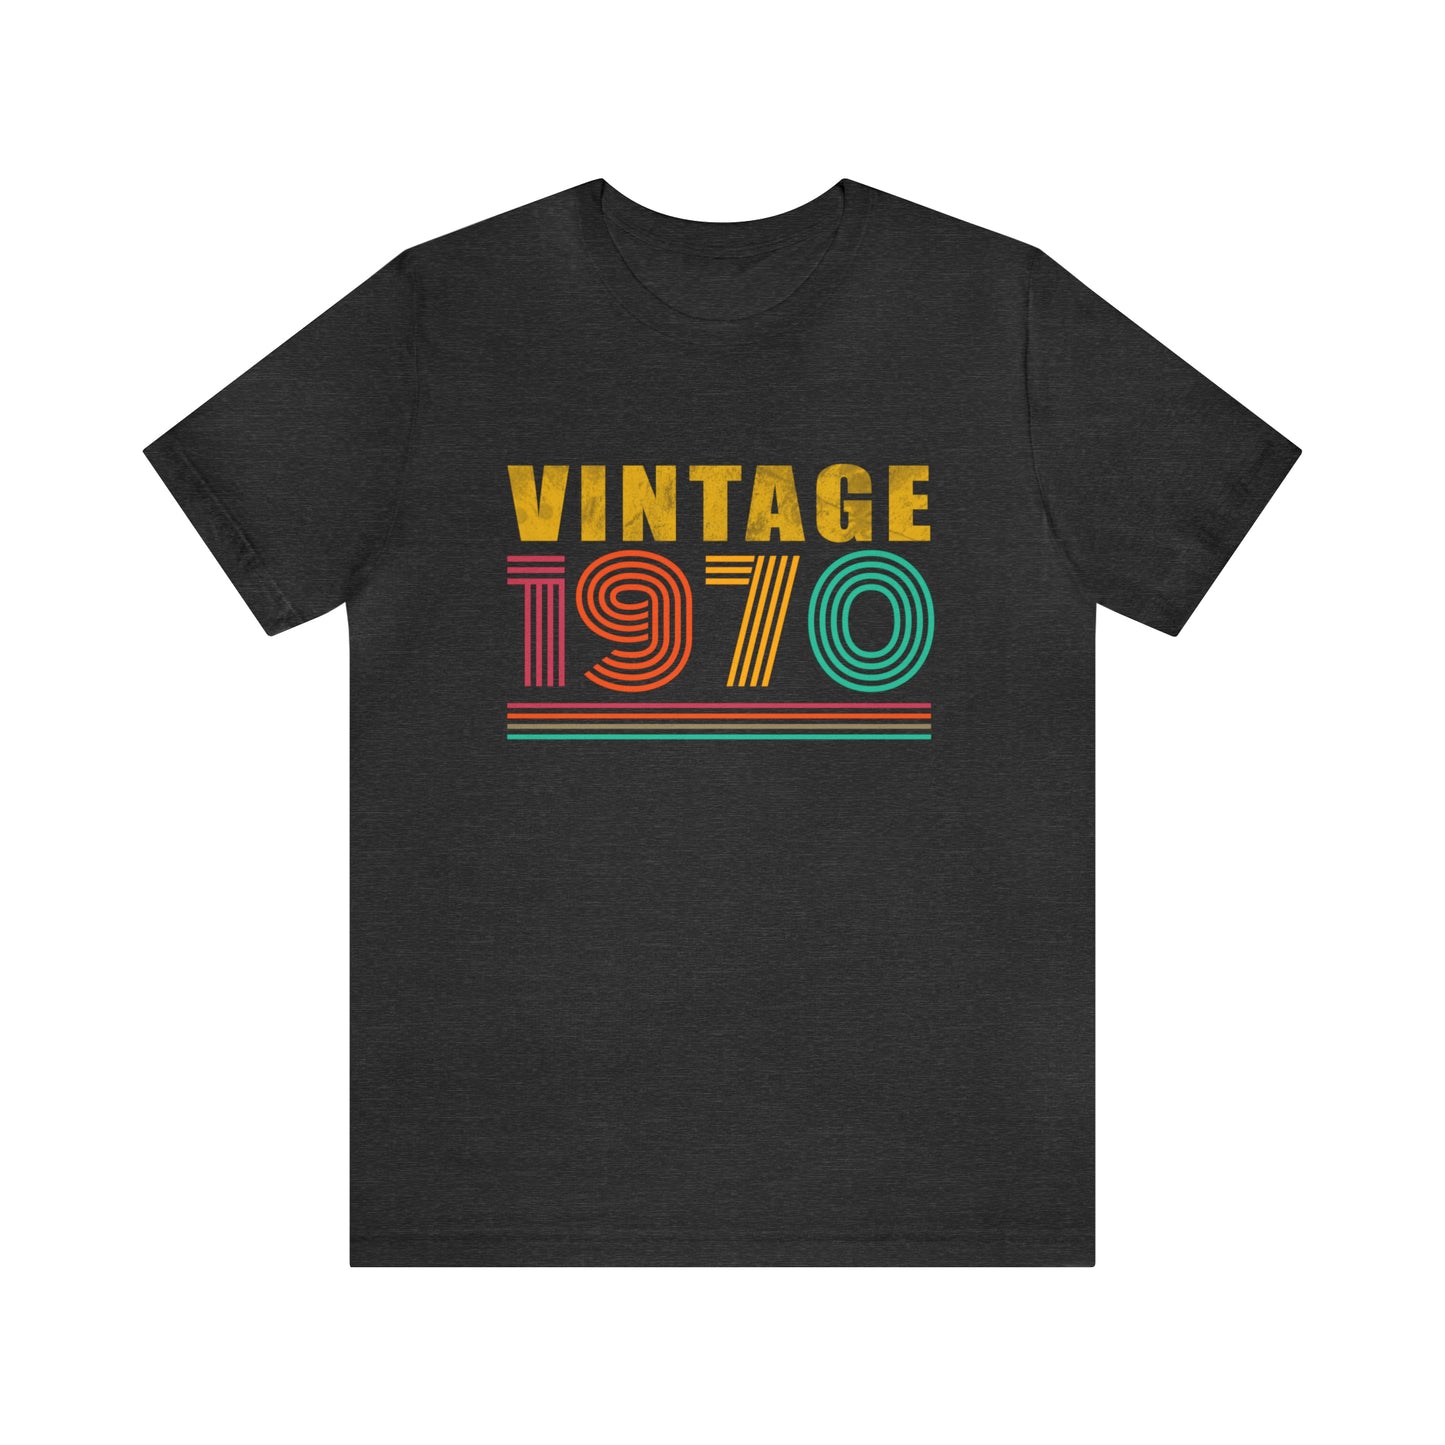 Vintage 1970 T-Shirt